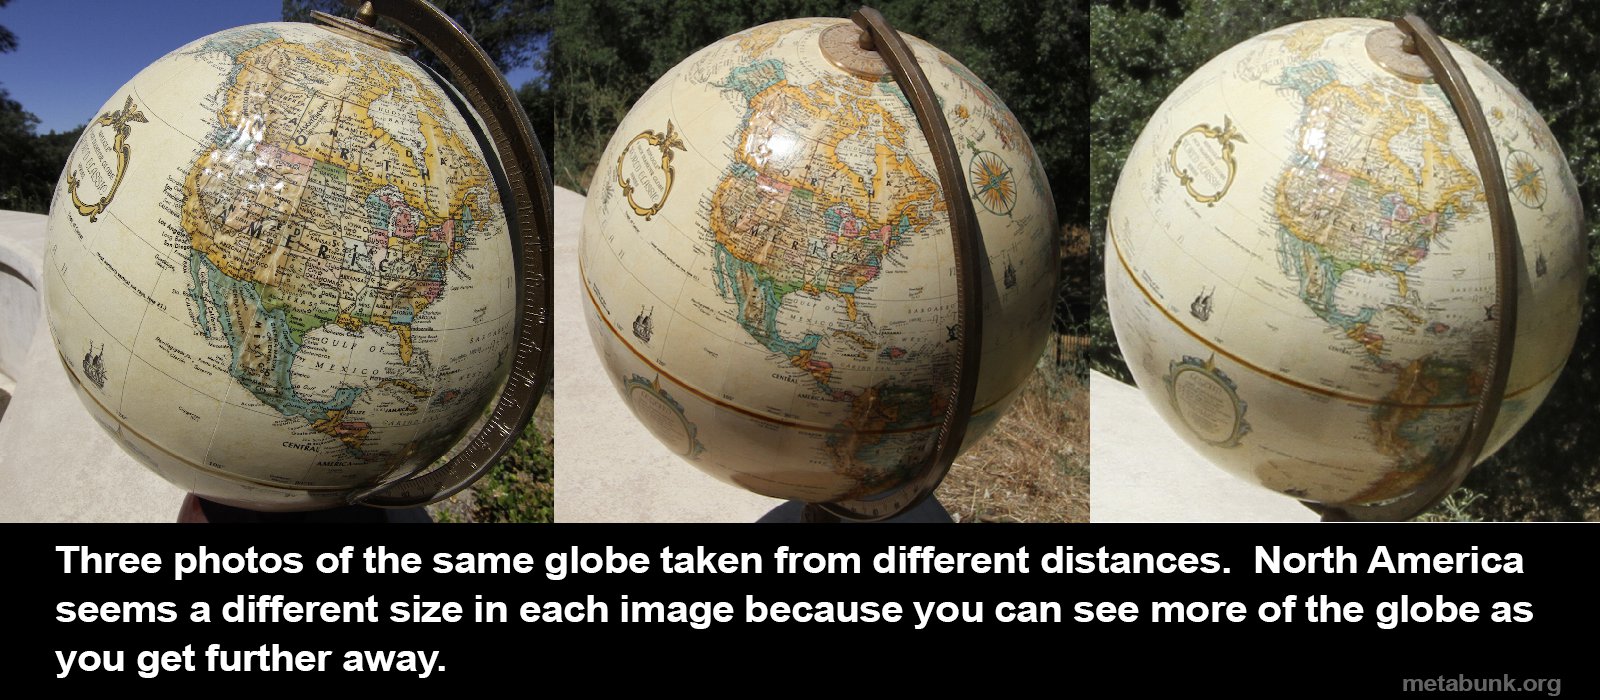 globe_comparison_with_distance.jpg